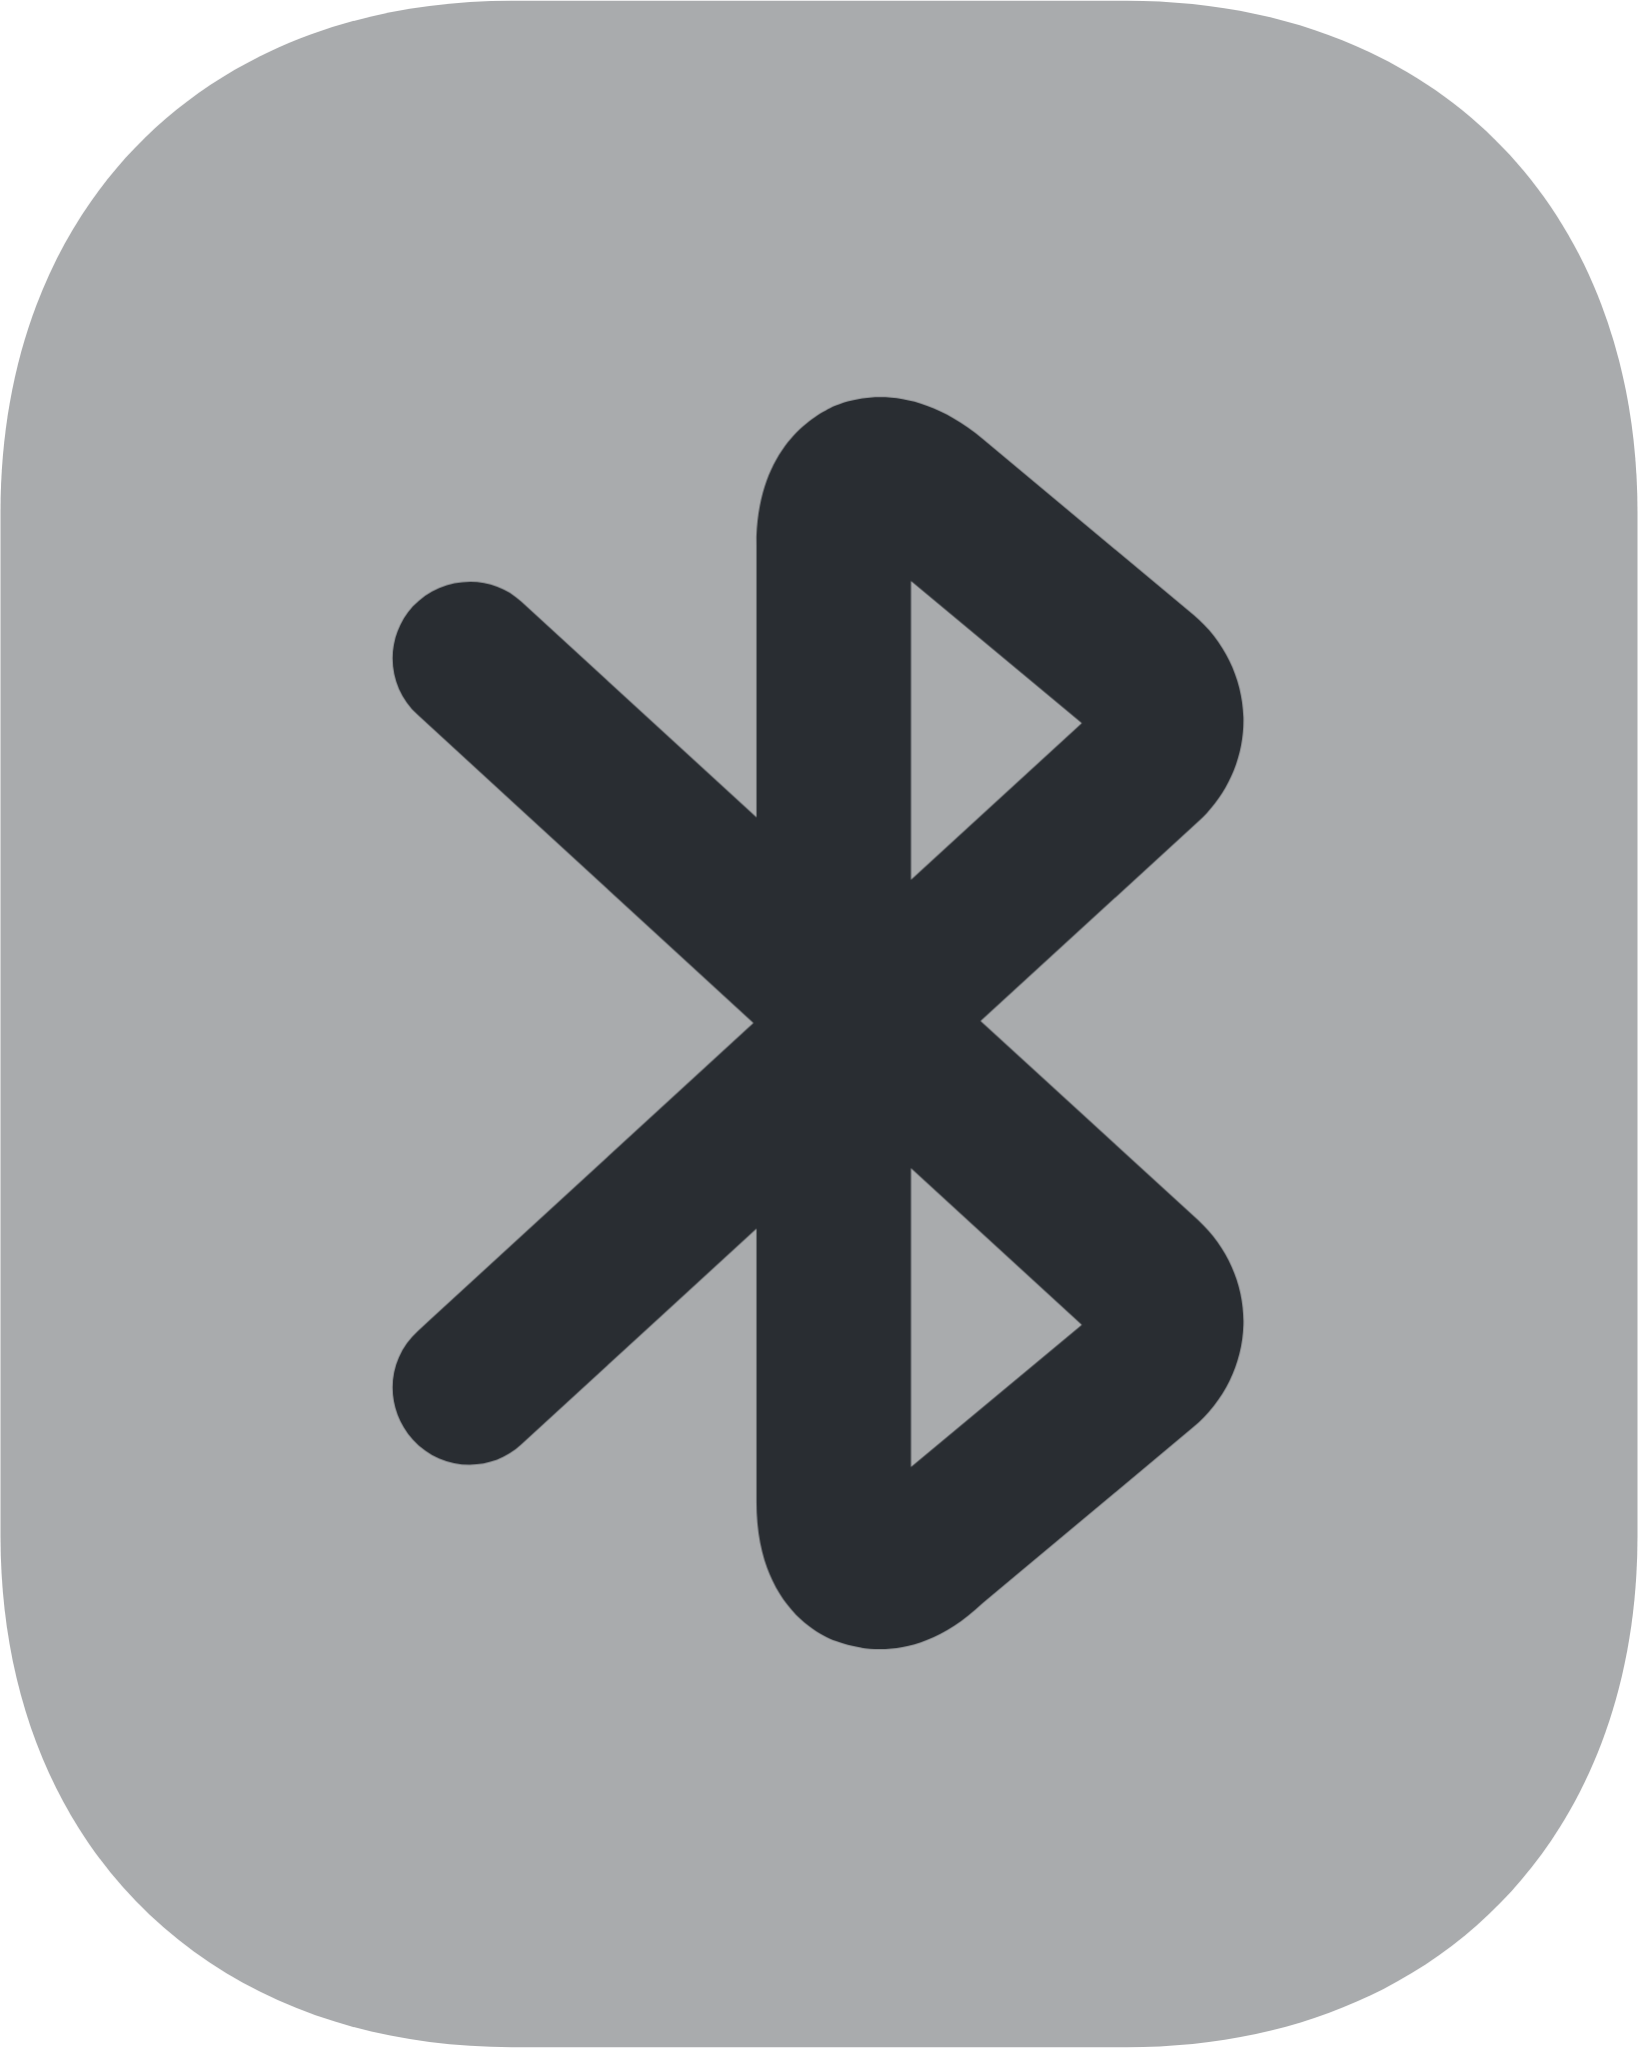 bluetooth rectangle icon